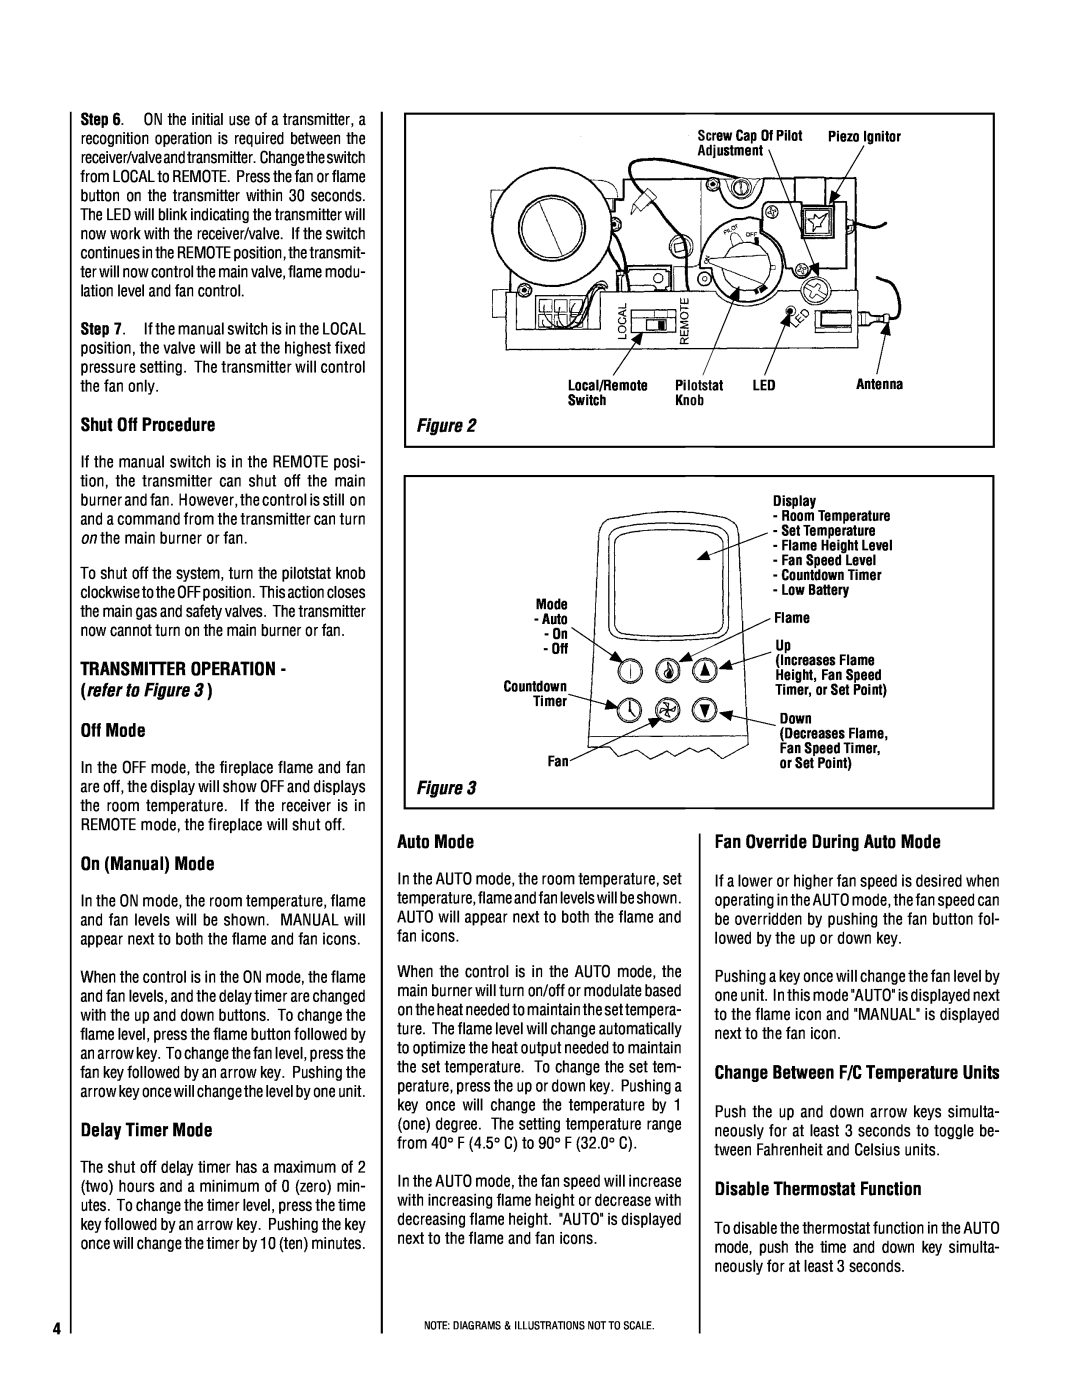 Magnavox LSS-40CP manual Shut Off Procedure, Off Mode, Figure, On Manual Mode, Delay Timer Mode, Auto Mode 